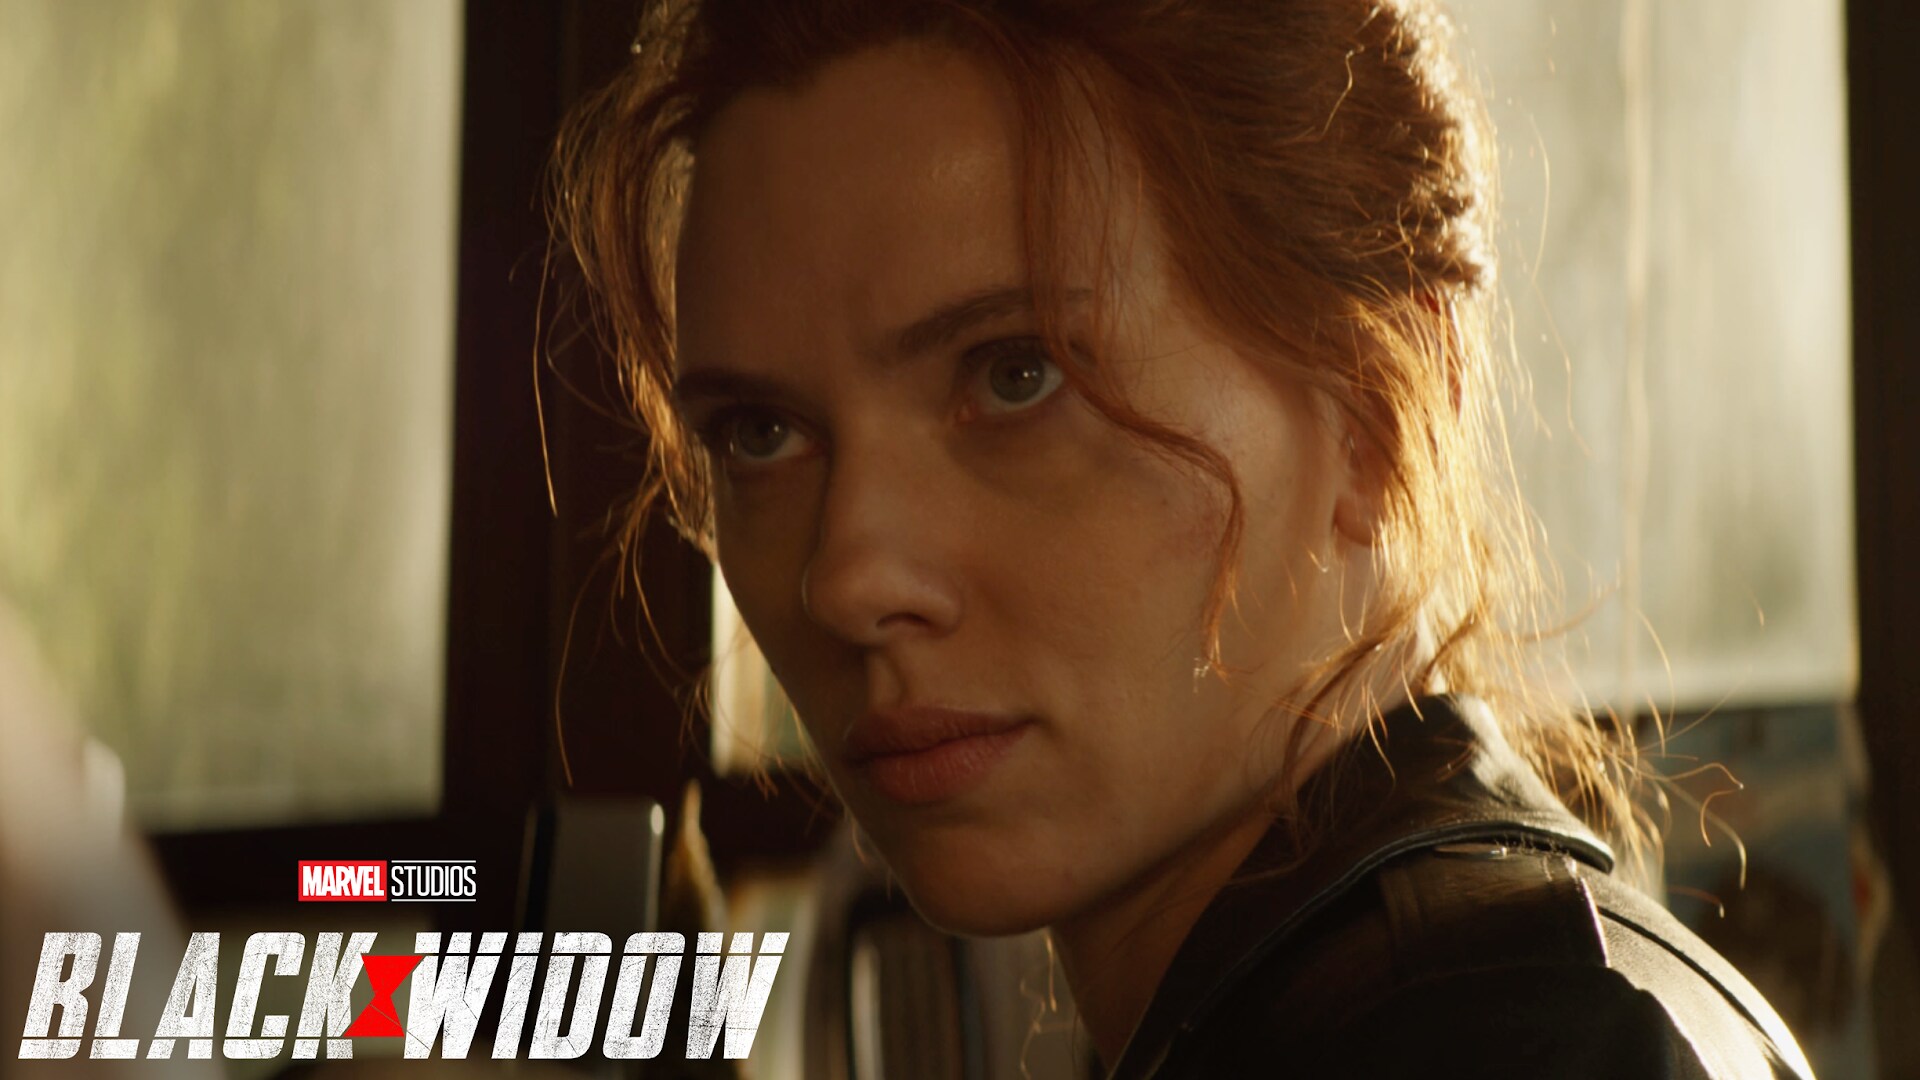 Marvel Studios’ Black Widow – Brand New Special Look!